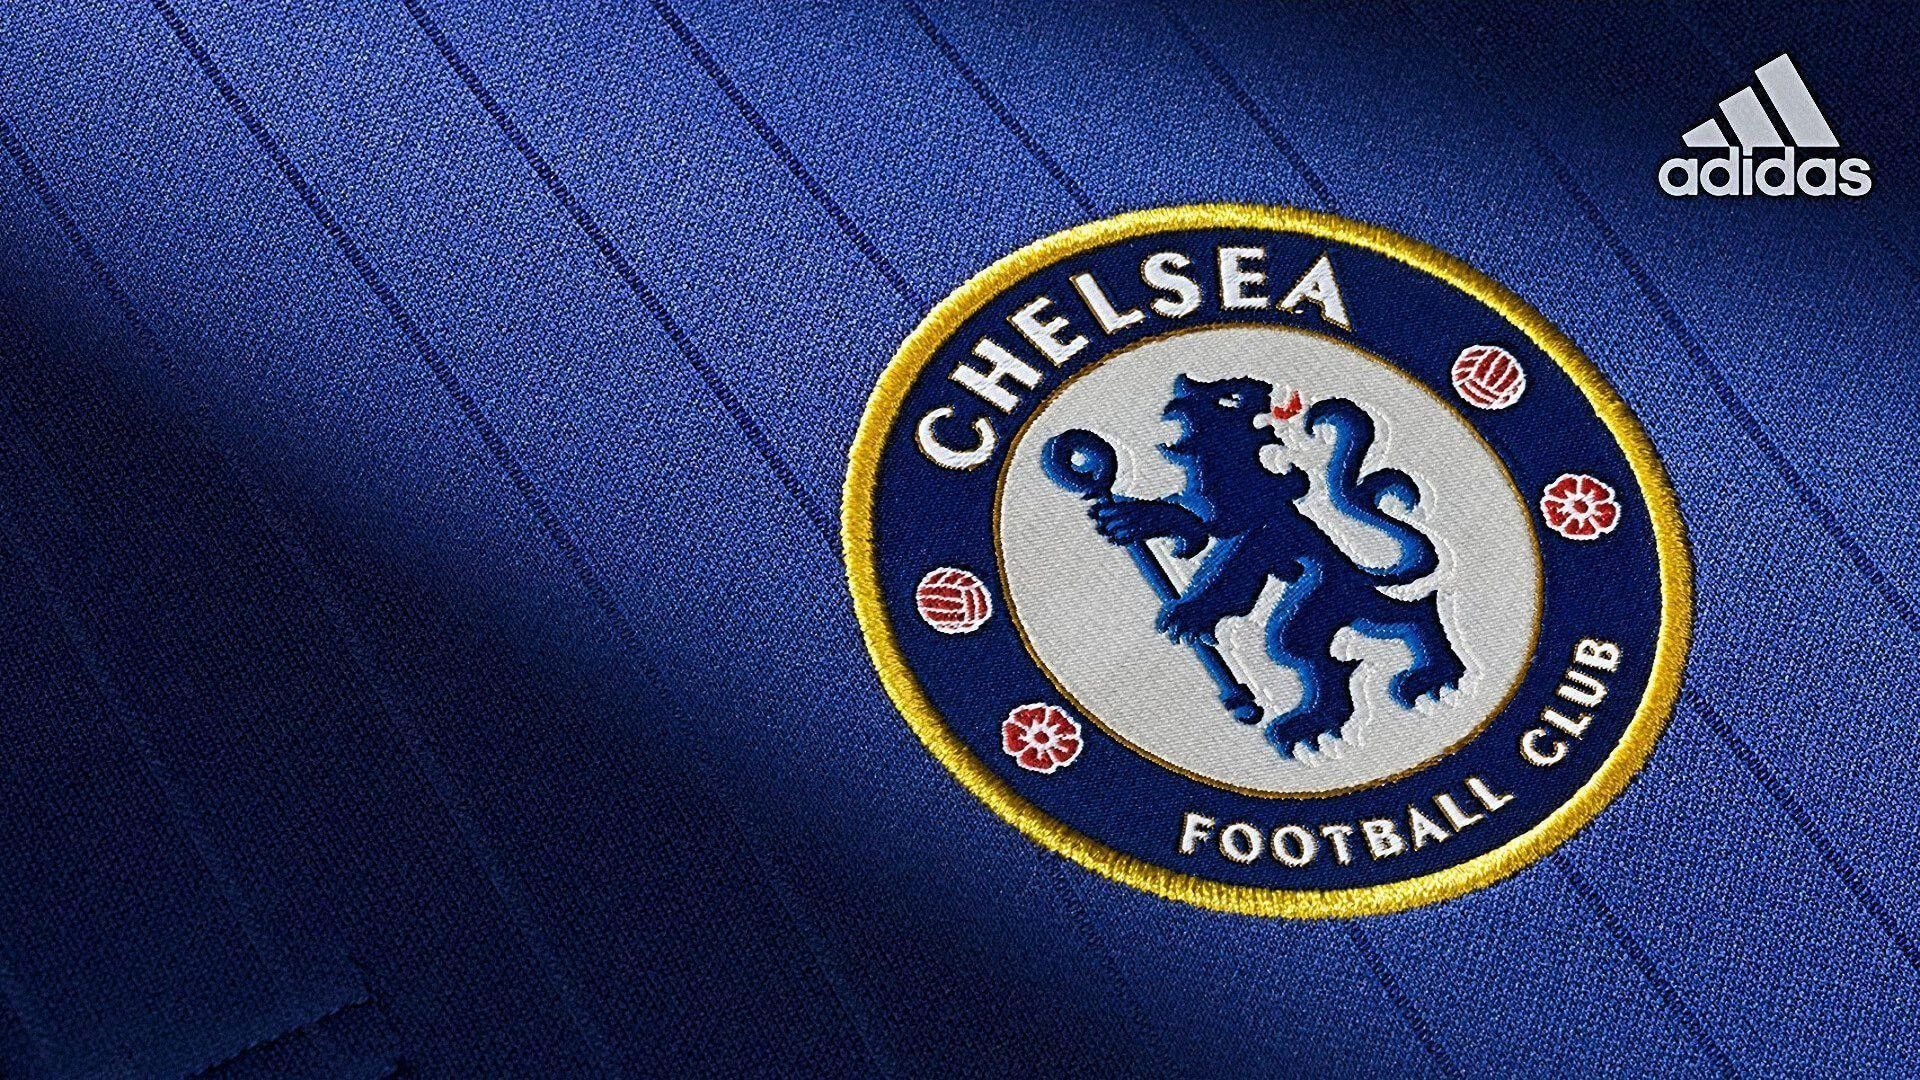 HD Chelsea Champions League Wallpaper Football Wallpaper